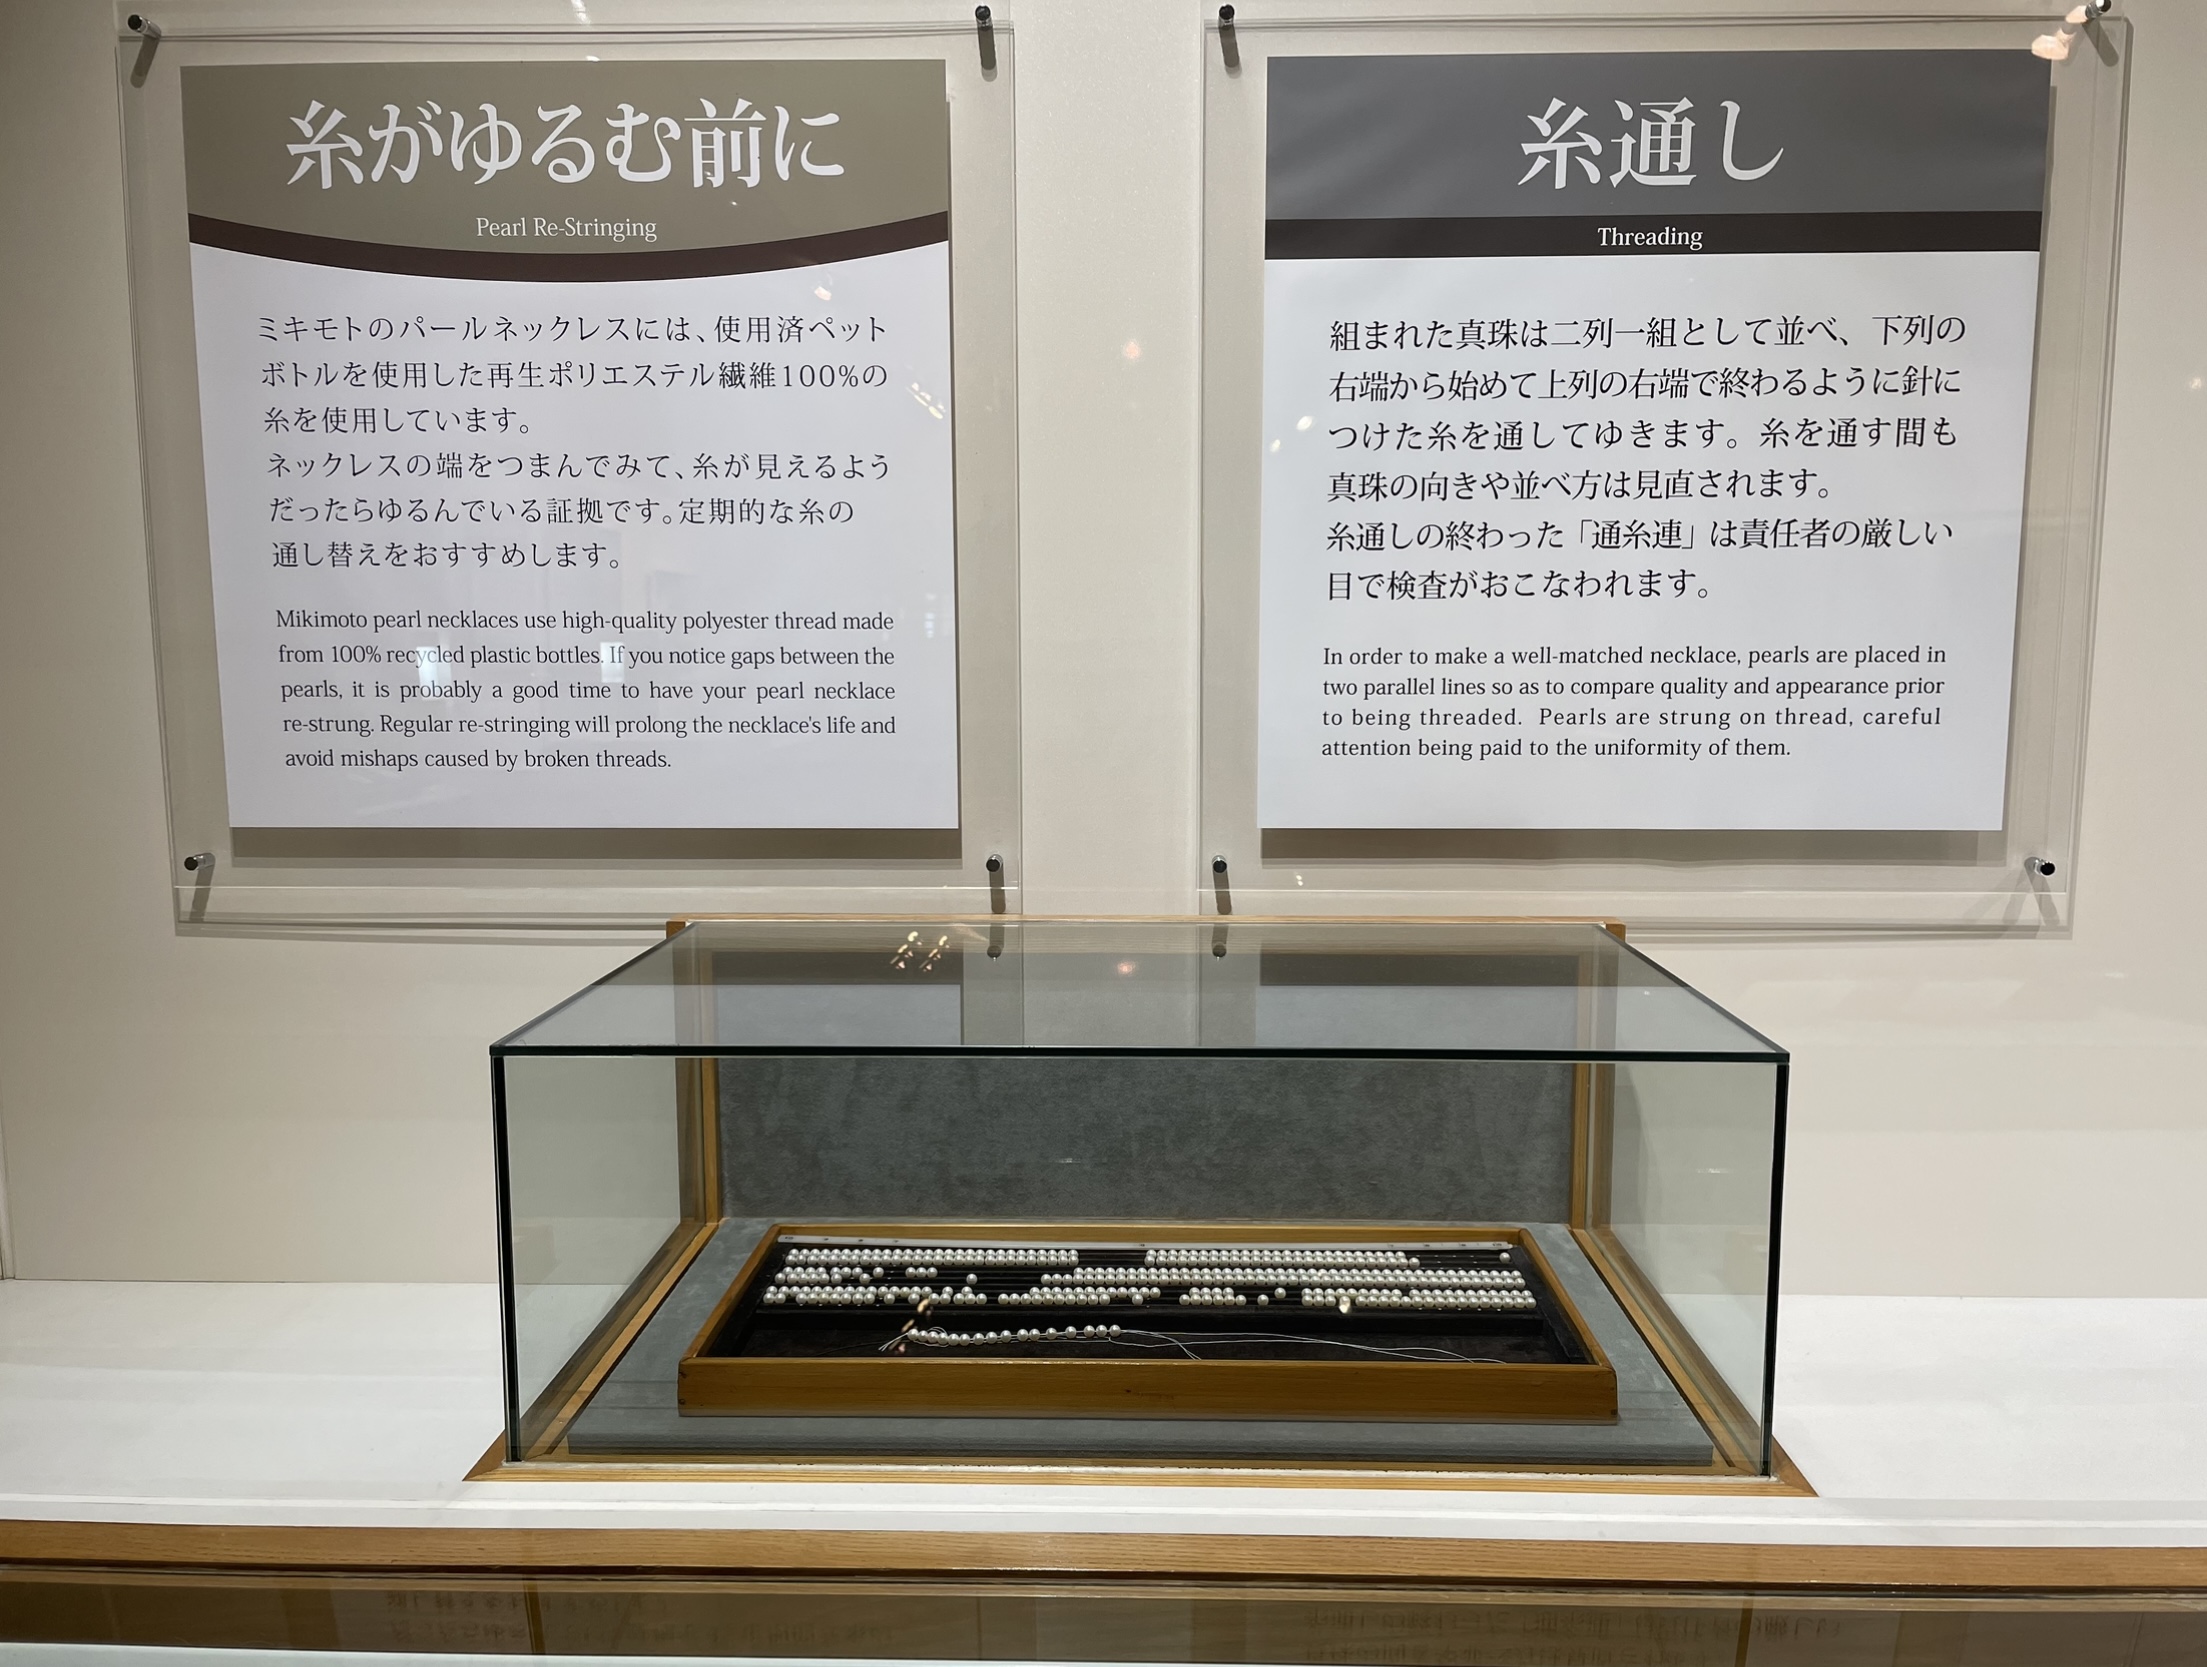 Pearl threading display - Mikimoto Pearl Museum